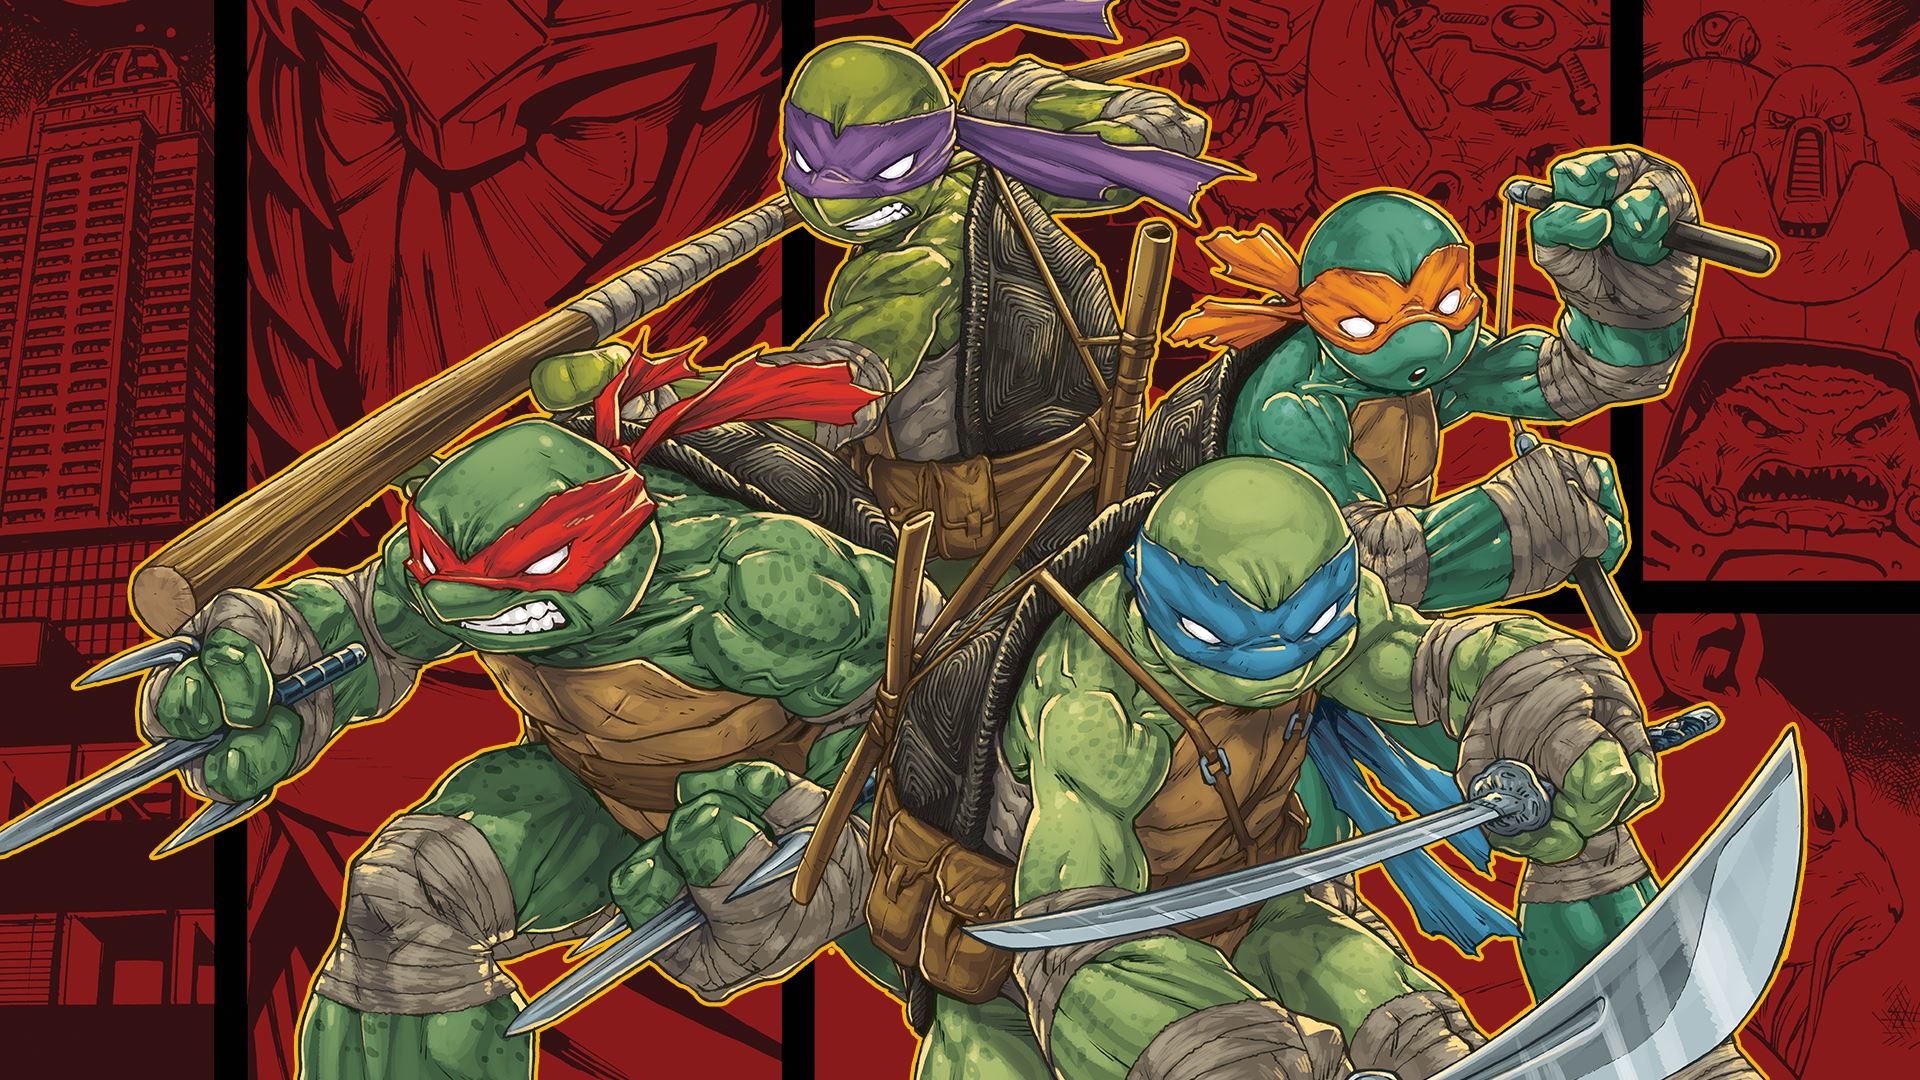 Video Game Teenage Mutant Ninja Turtles: Mutants in Manhattan HD Wallpaper | Background Image